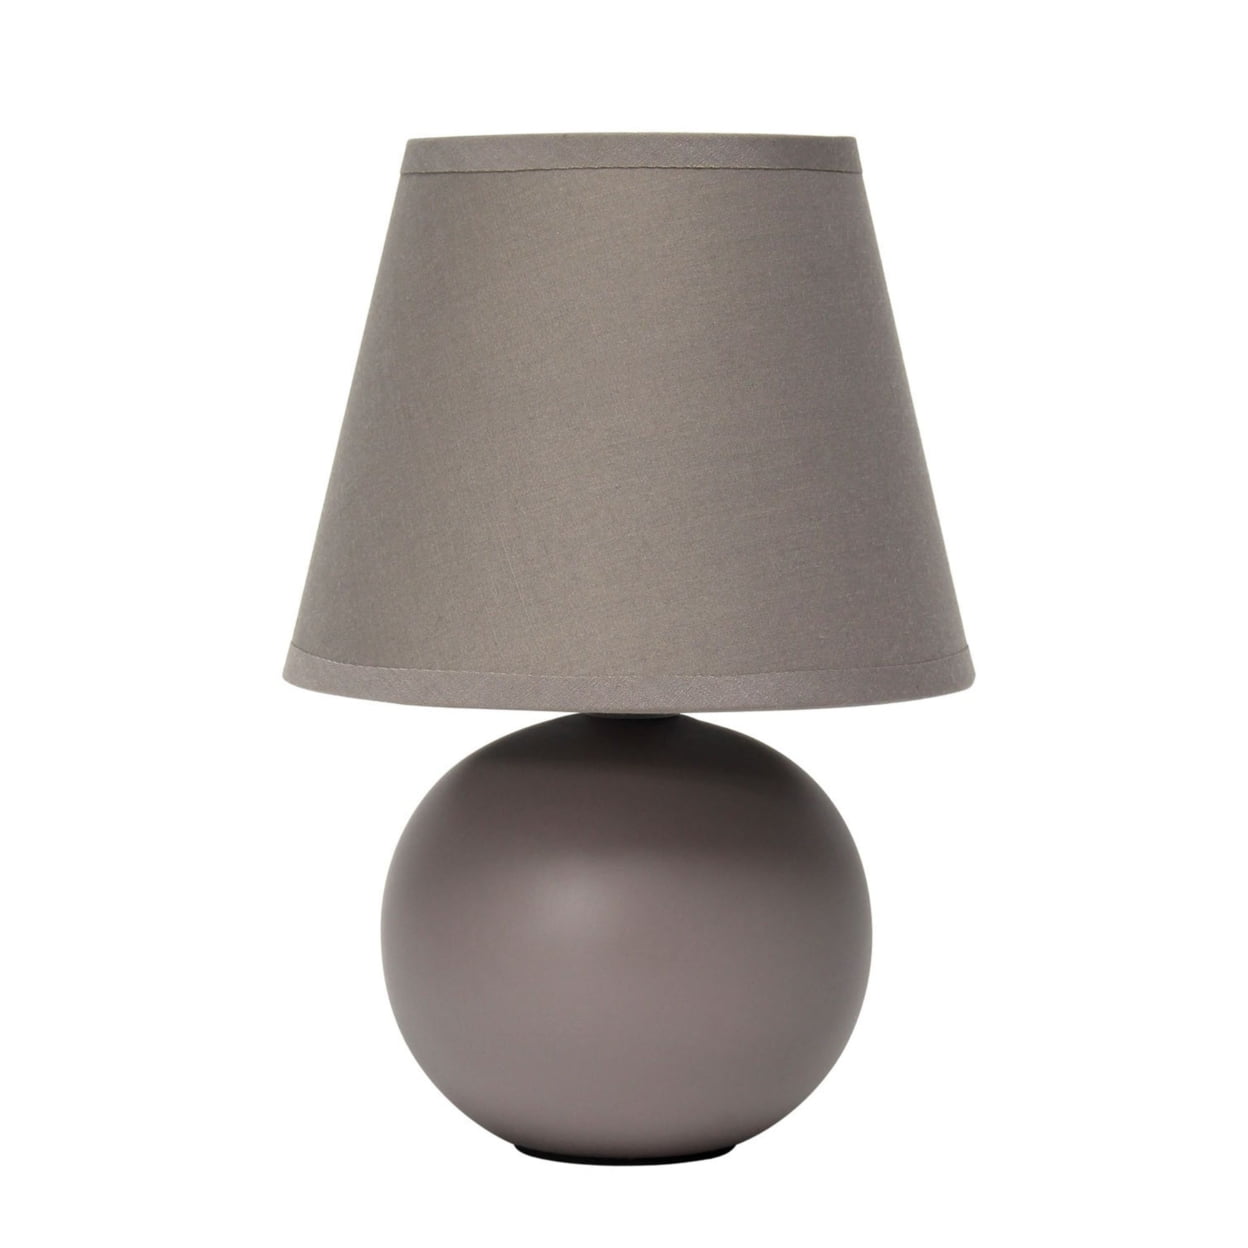 Lt2008-gry Mini Ceramic Globe Table Lamp, Gray